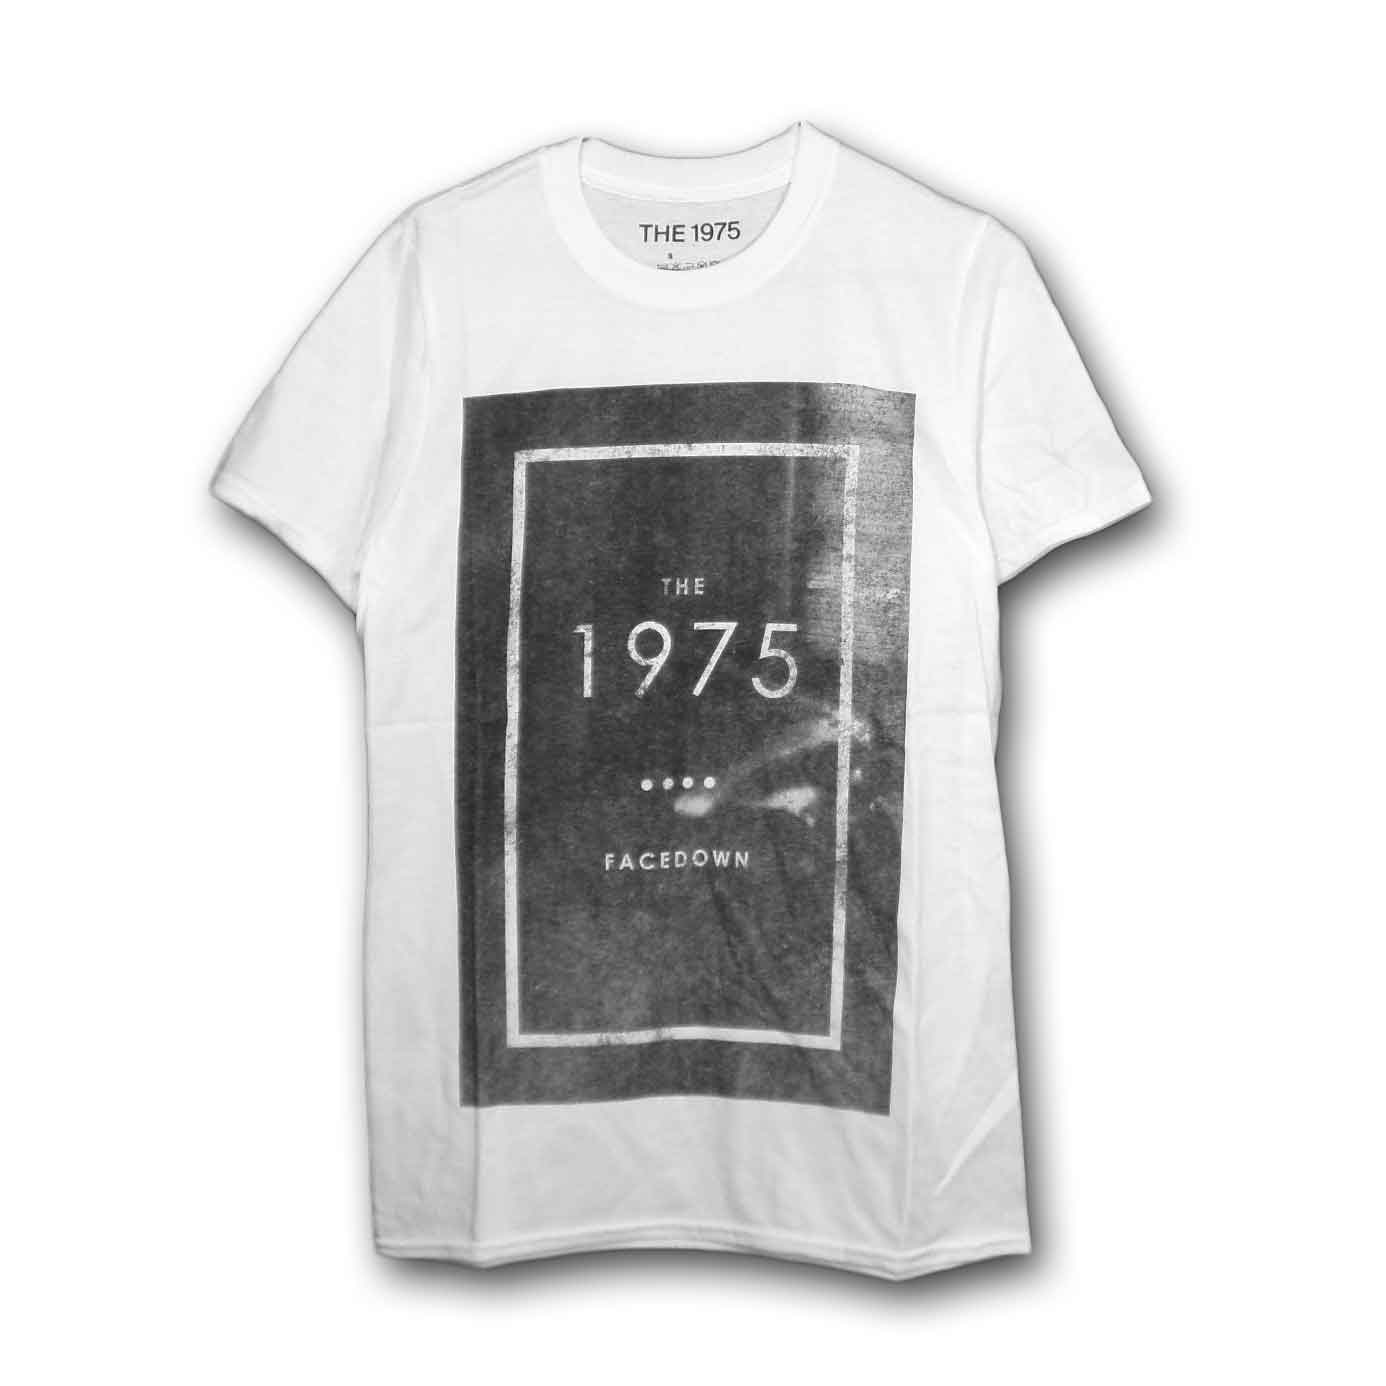 The 1975 バンドTシャツ ザ・ナインティーンセヴンティファイヴ Facedown - バンドTシャツの通販ショップ『Tee-Merch!』